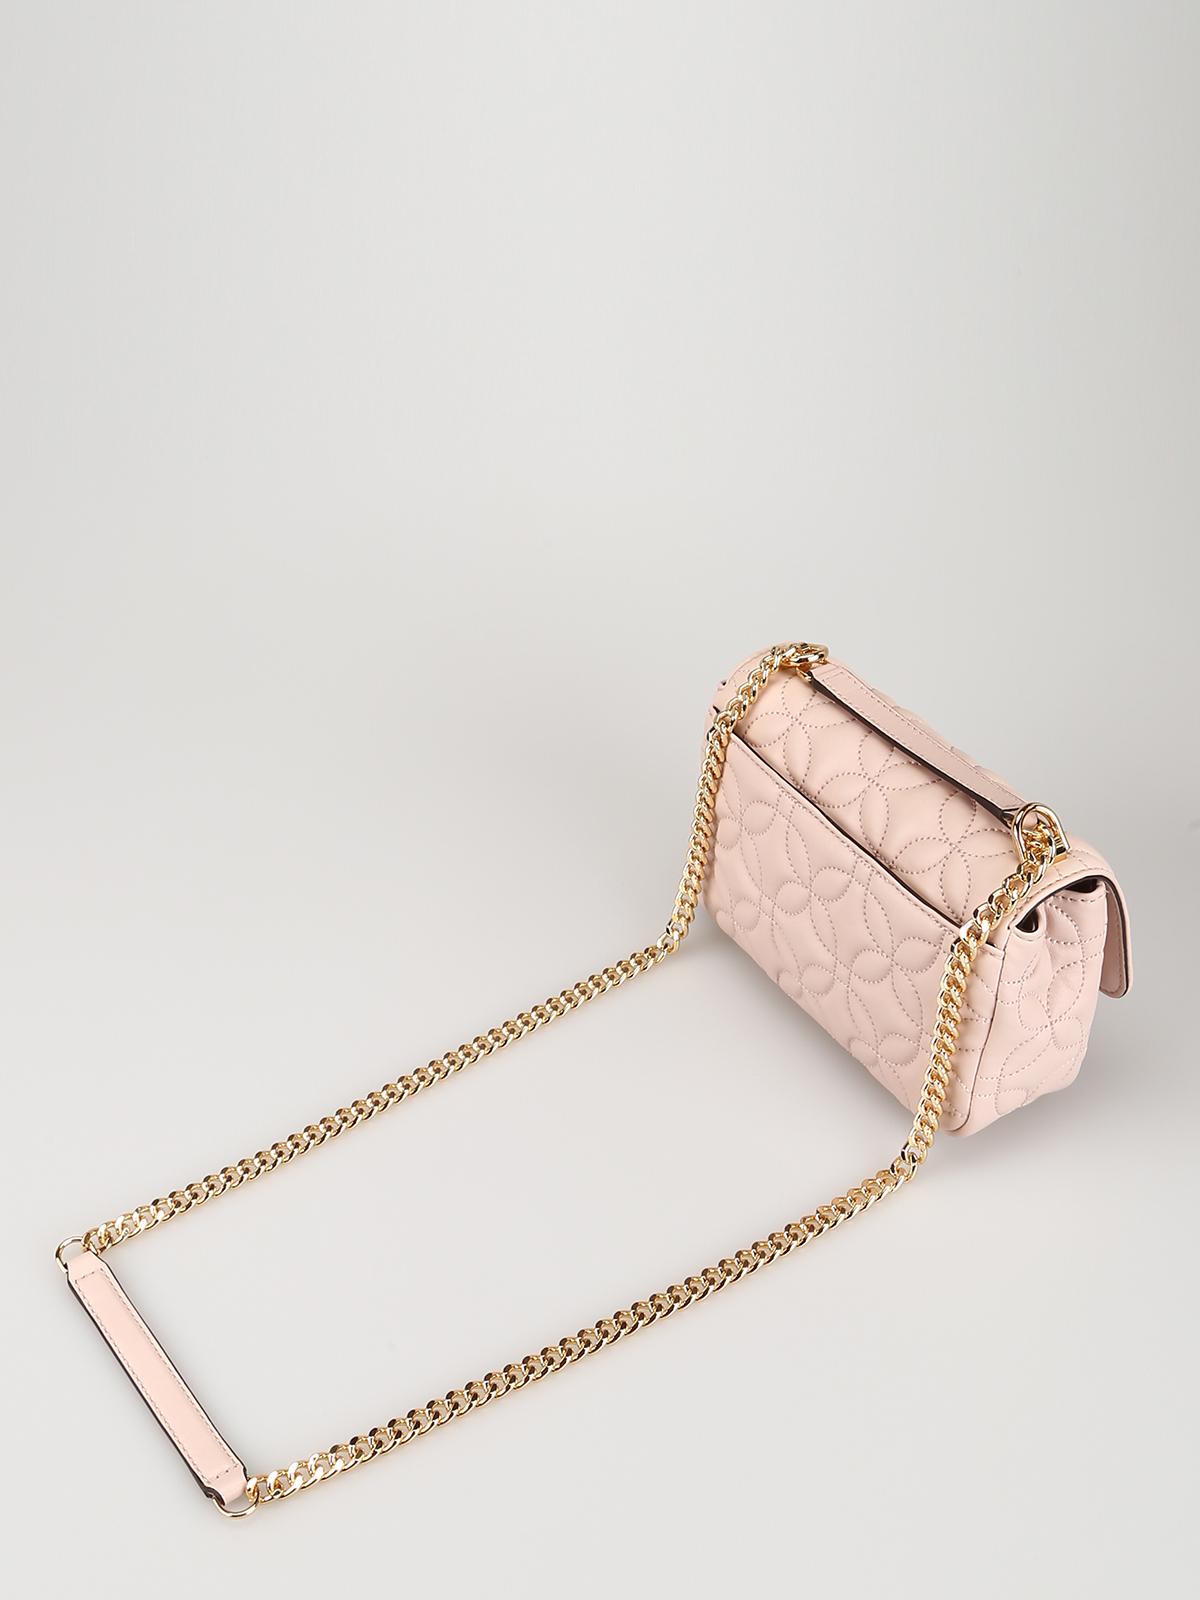 Shoulder bags Michael Kors - Sloan soft pink matelassé leather